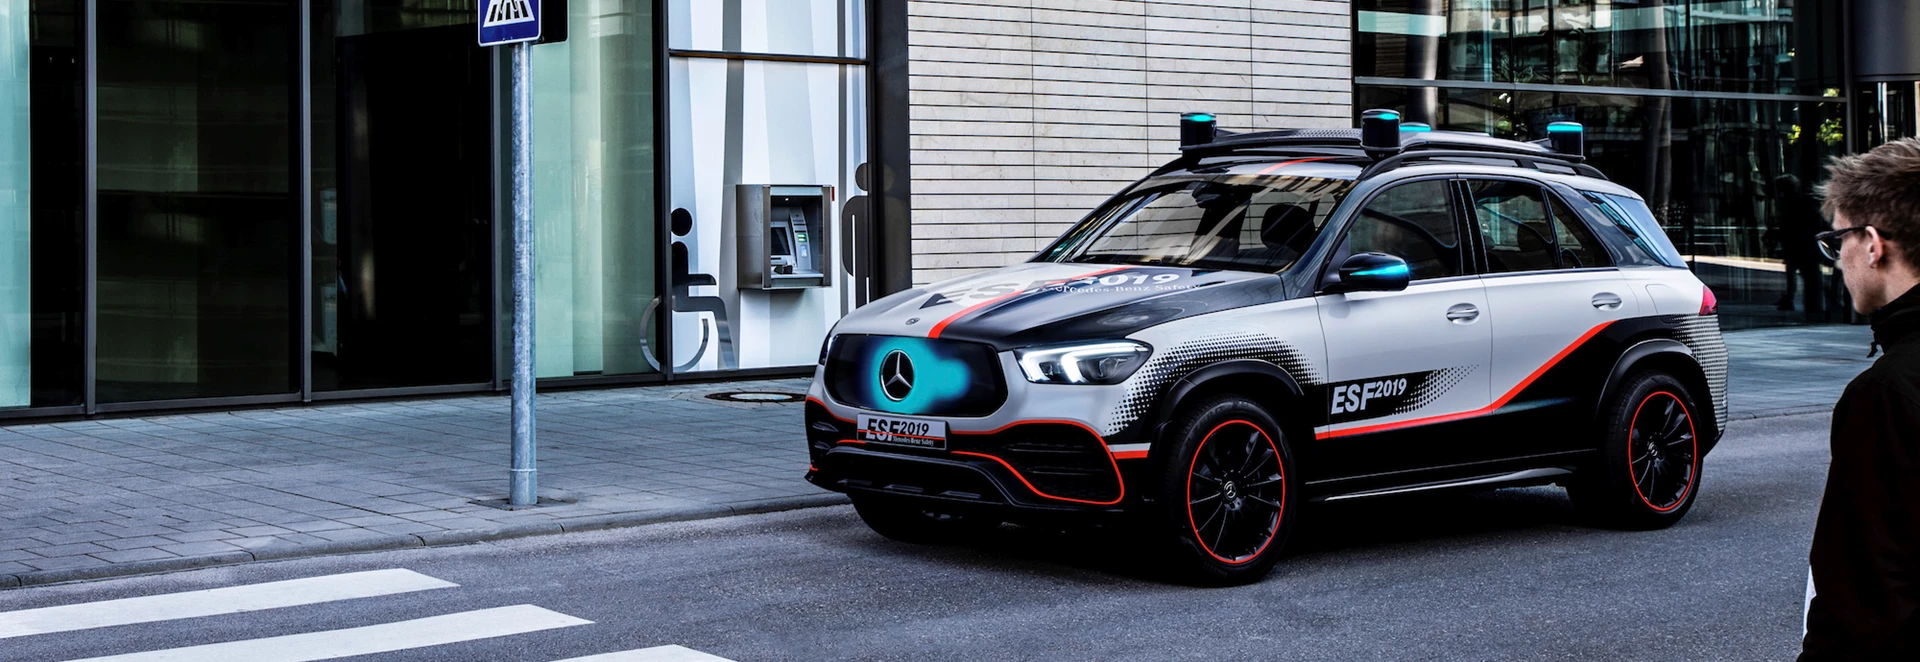 Mercedes-Benz unveils semi-autonomous experimental safety car based on GLE